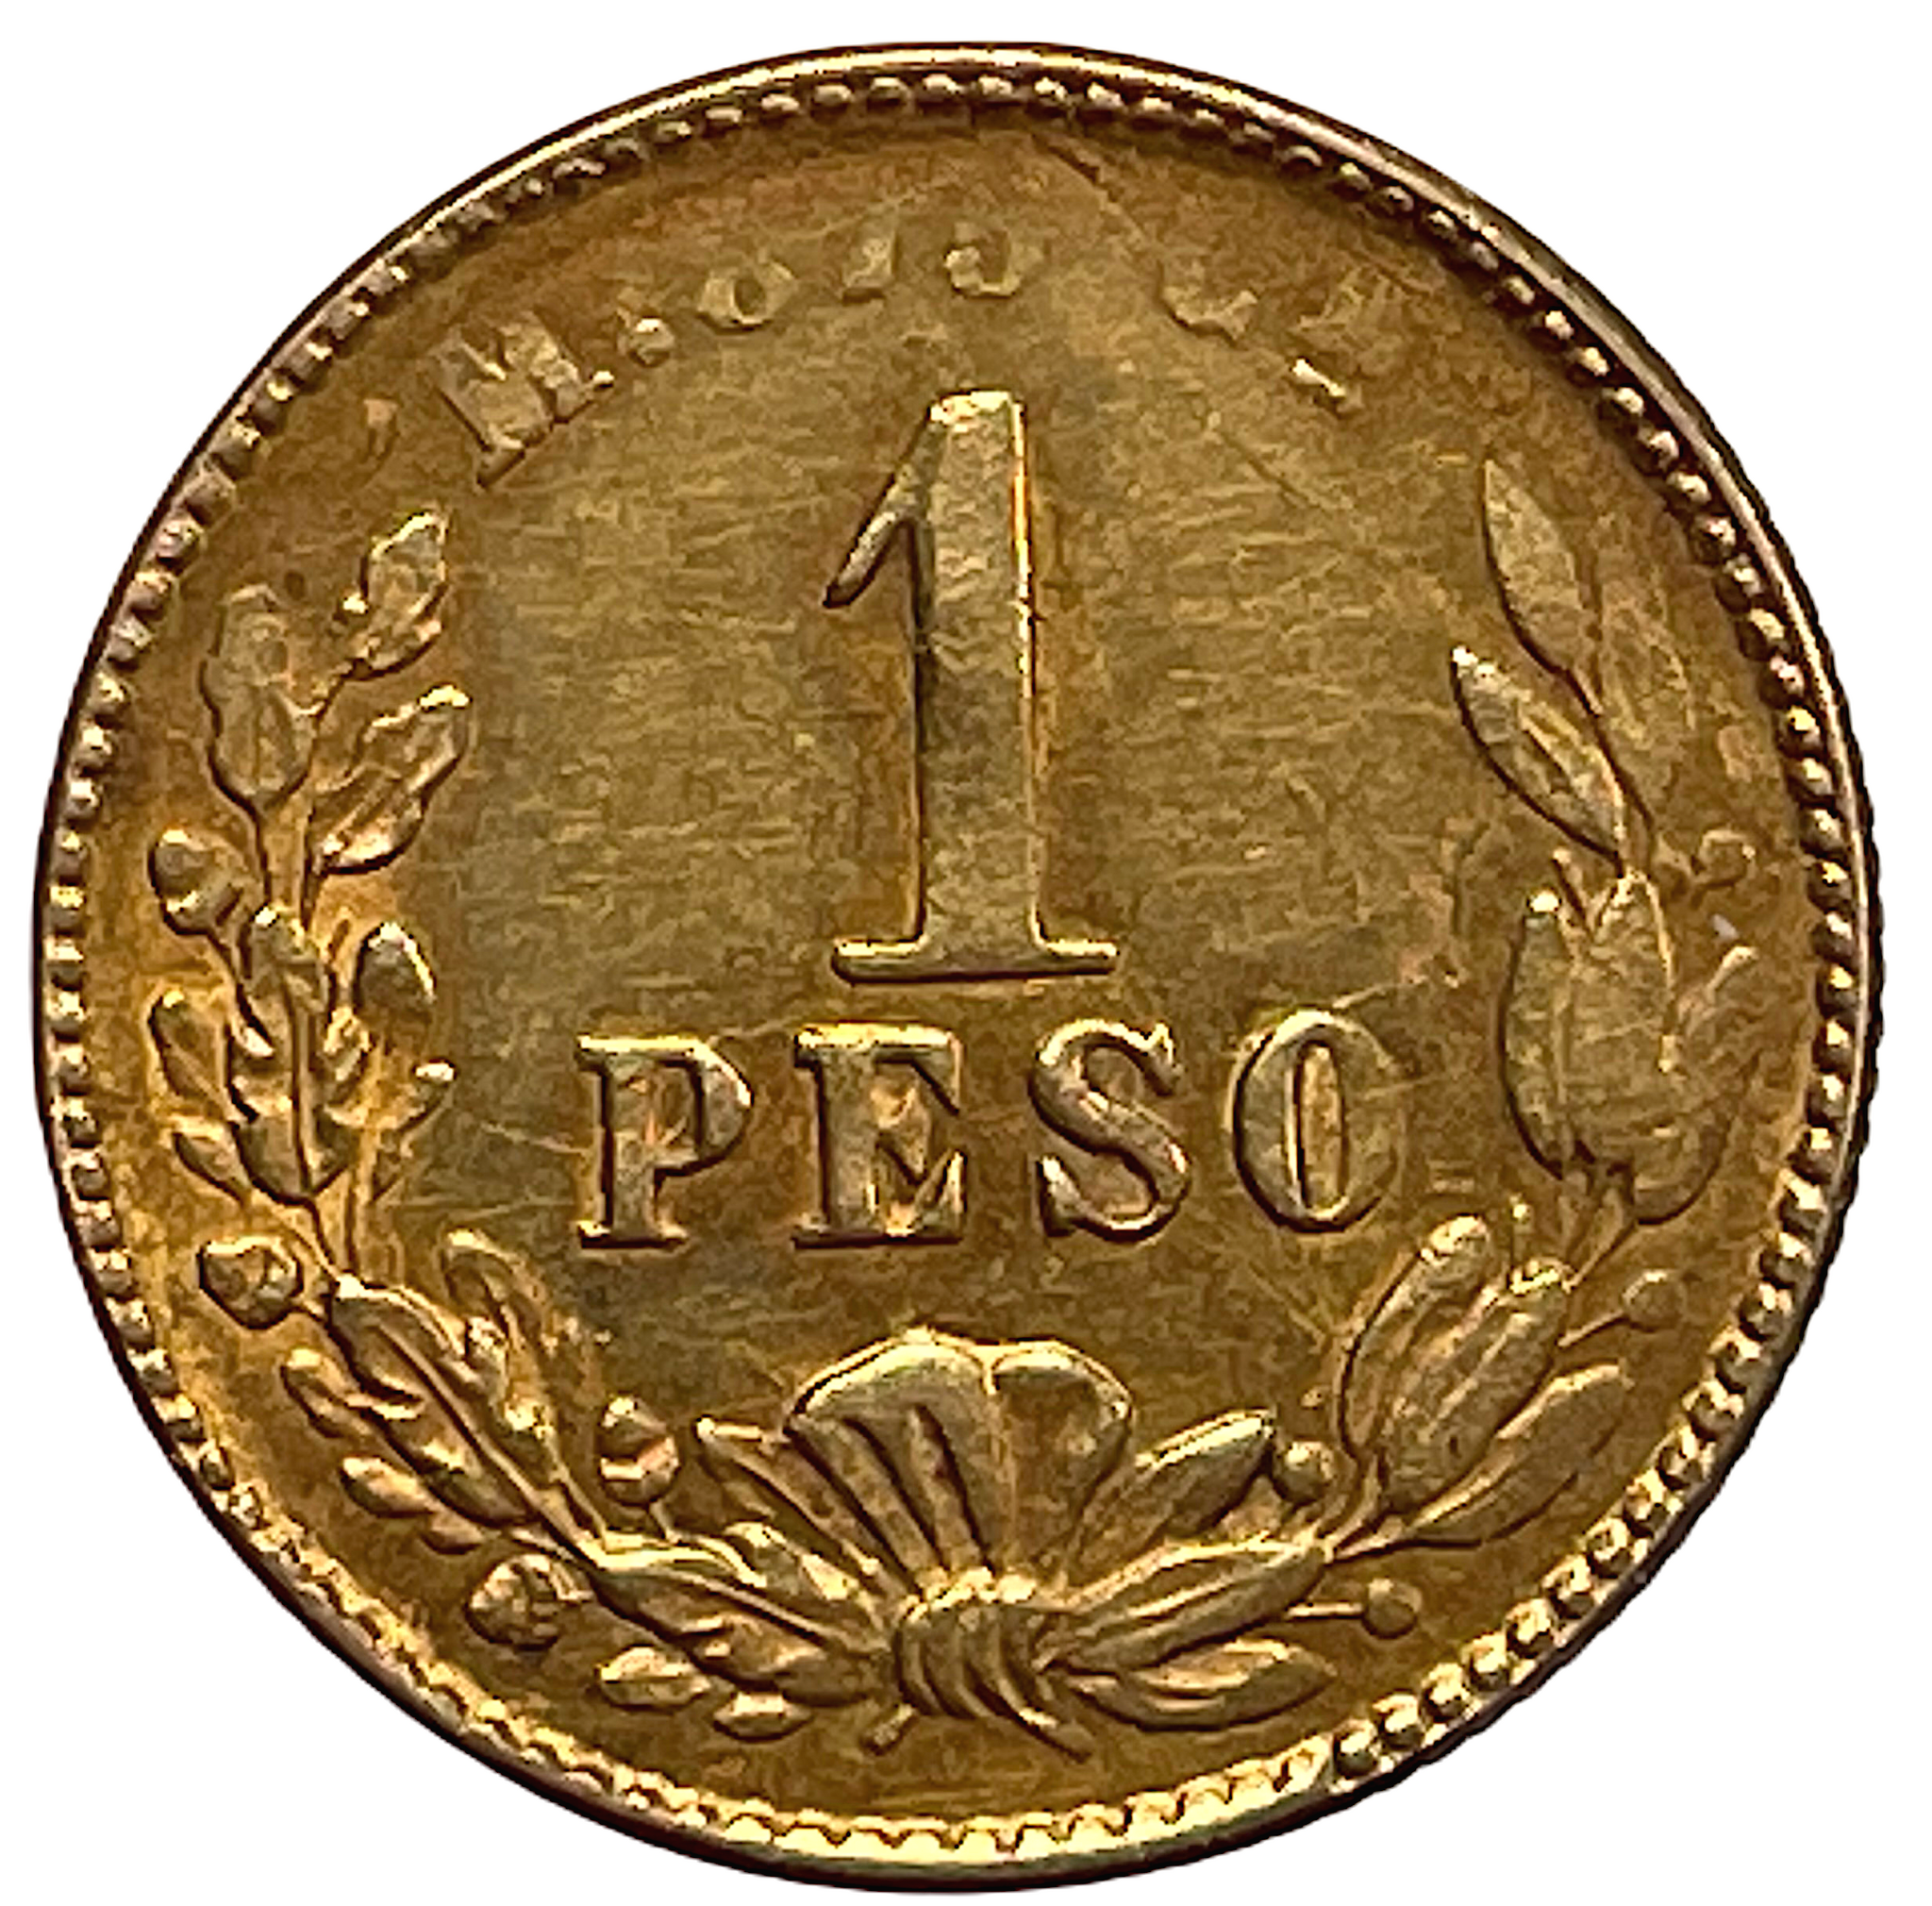 Mexiko - 1 Peso 1891